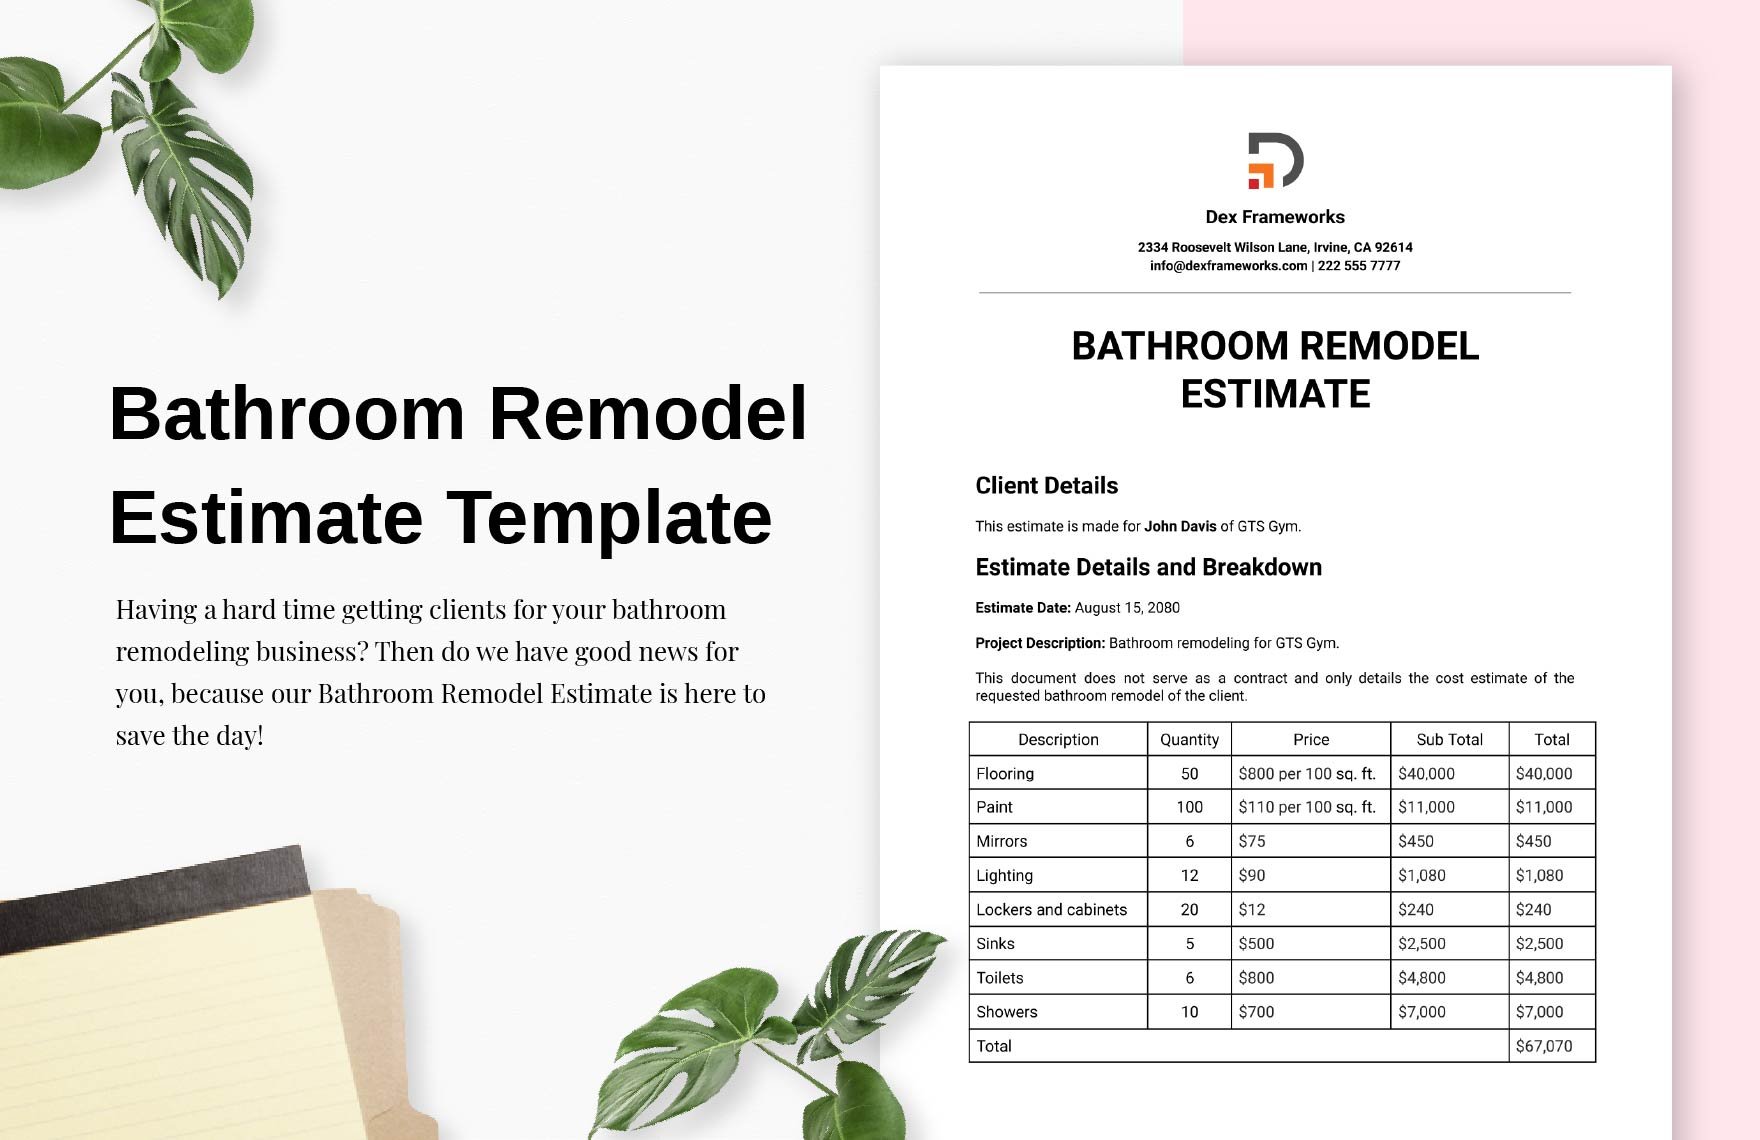 Bathroom Remodel Estimate Template in Word, Google Docs, PDF